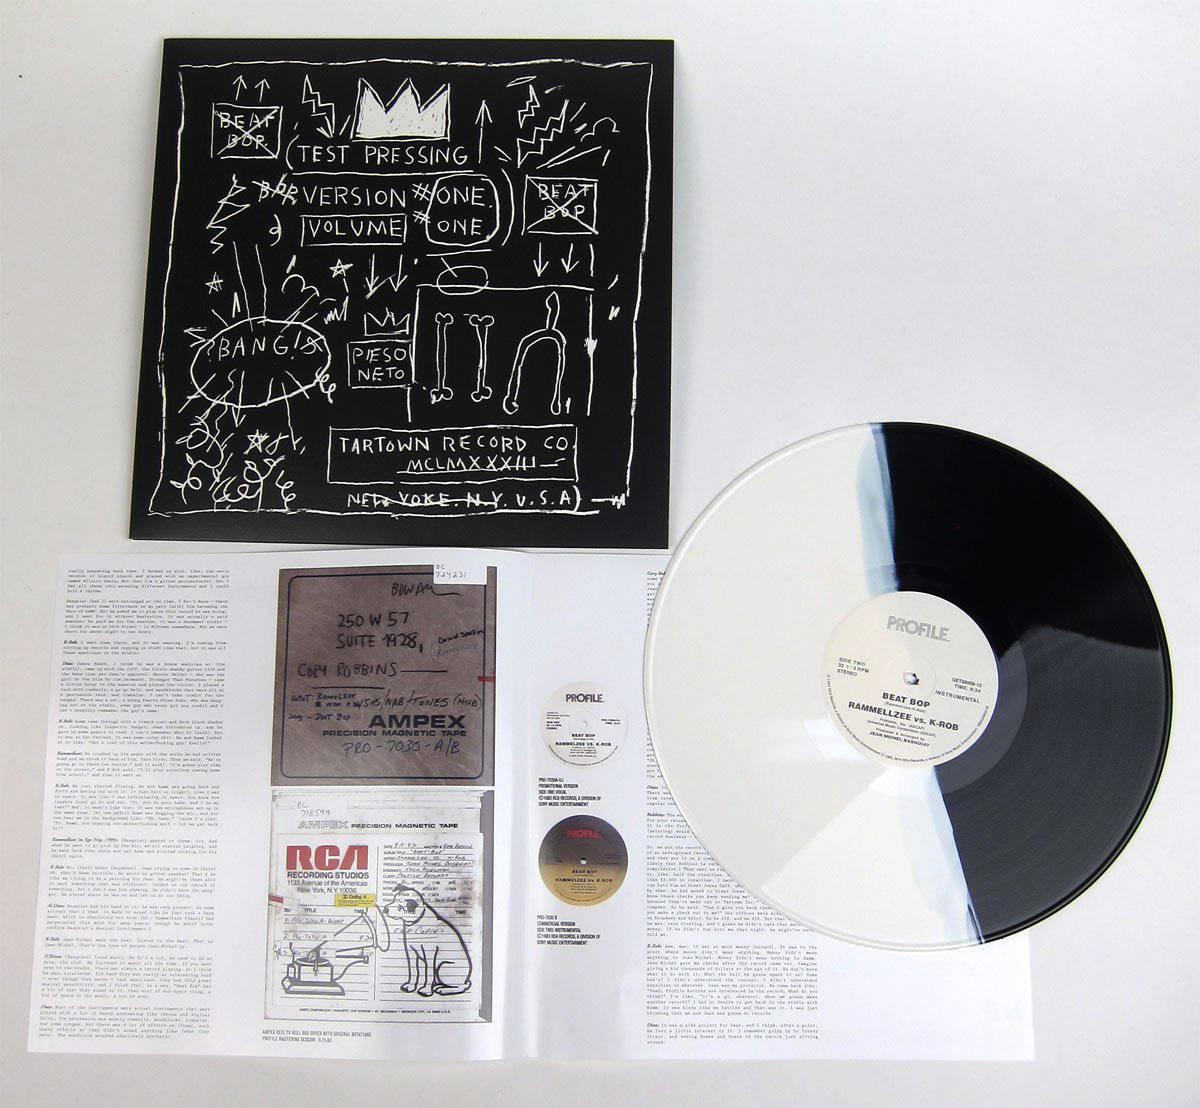 Basquiat Beat Bop Record Art 1983/2014 - Pop Art Print by after Jean-Michel Basquiat